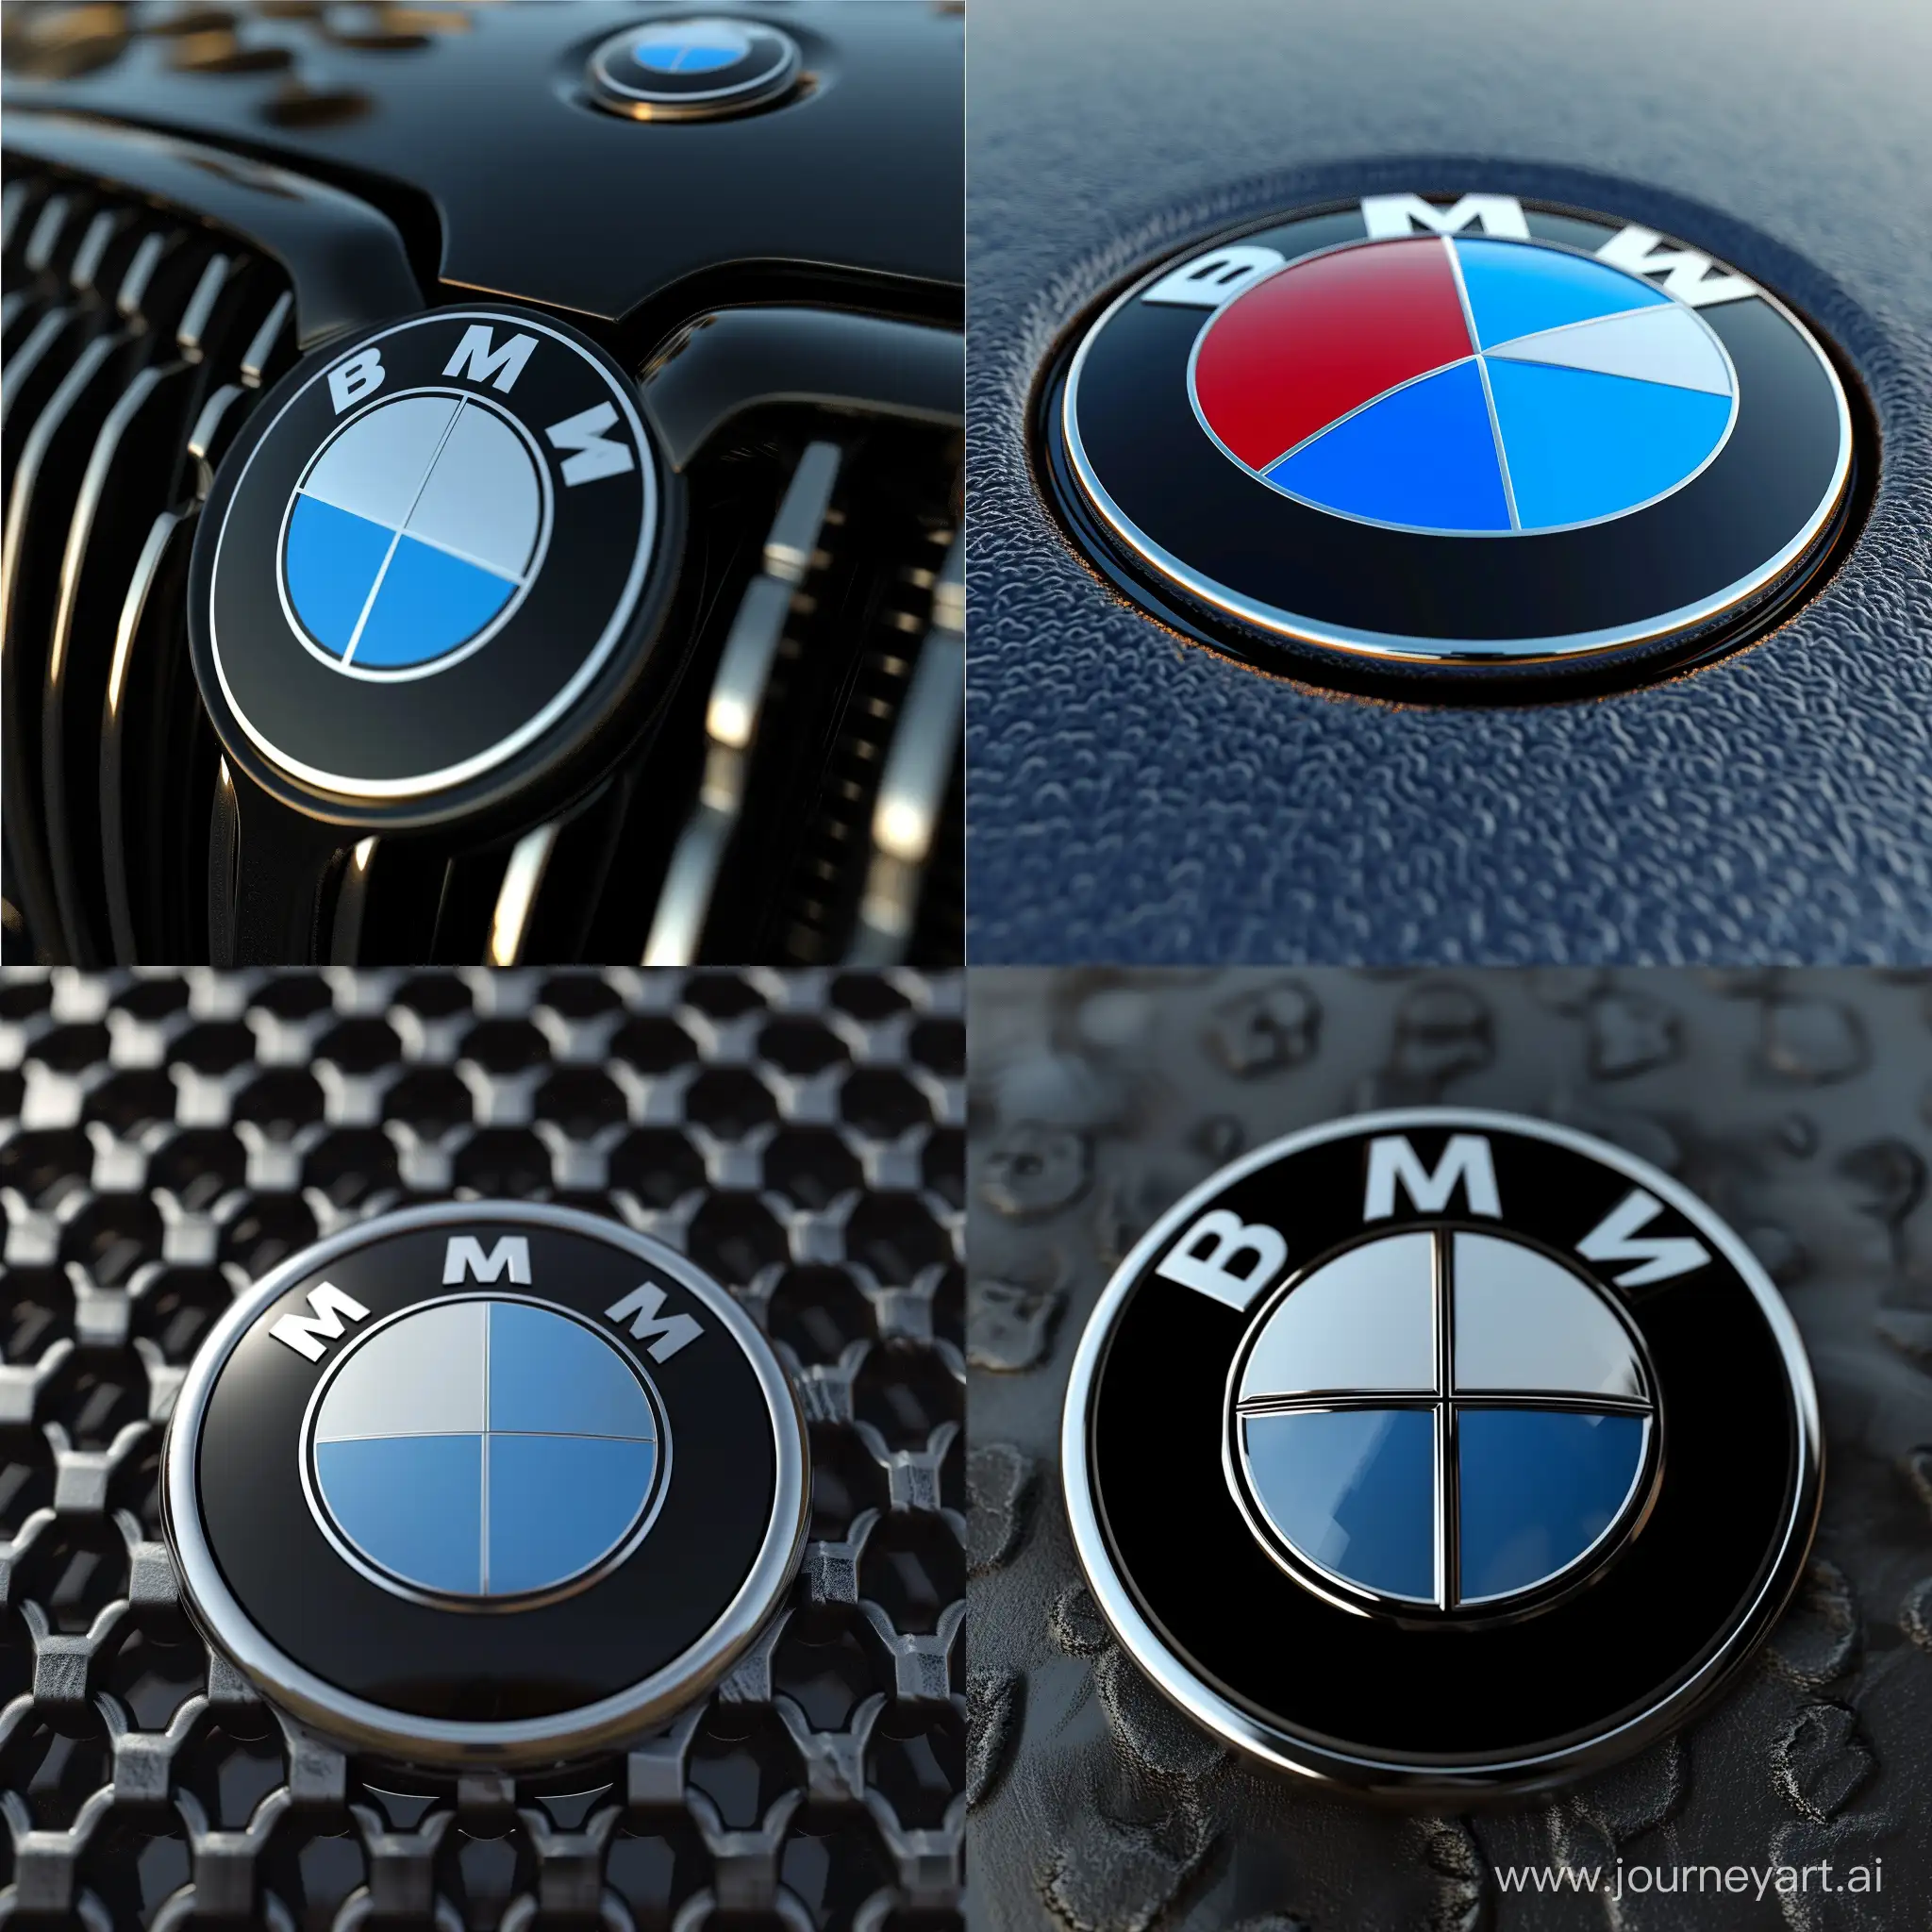 redesigned logo for BMW company